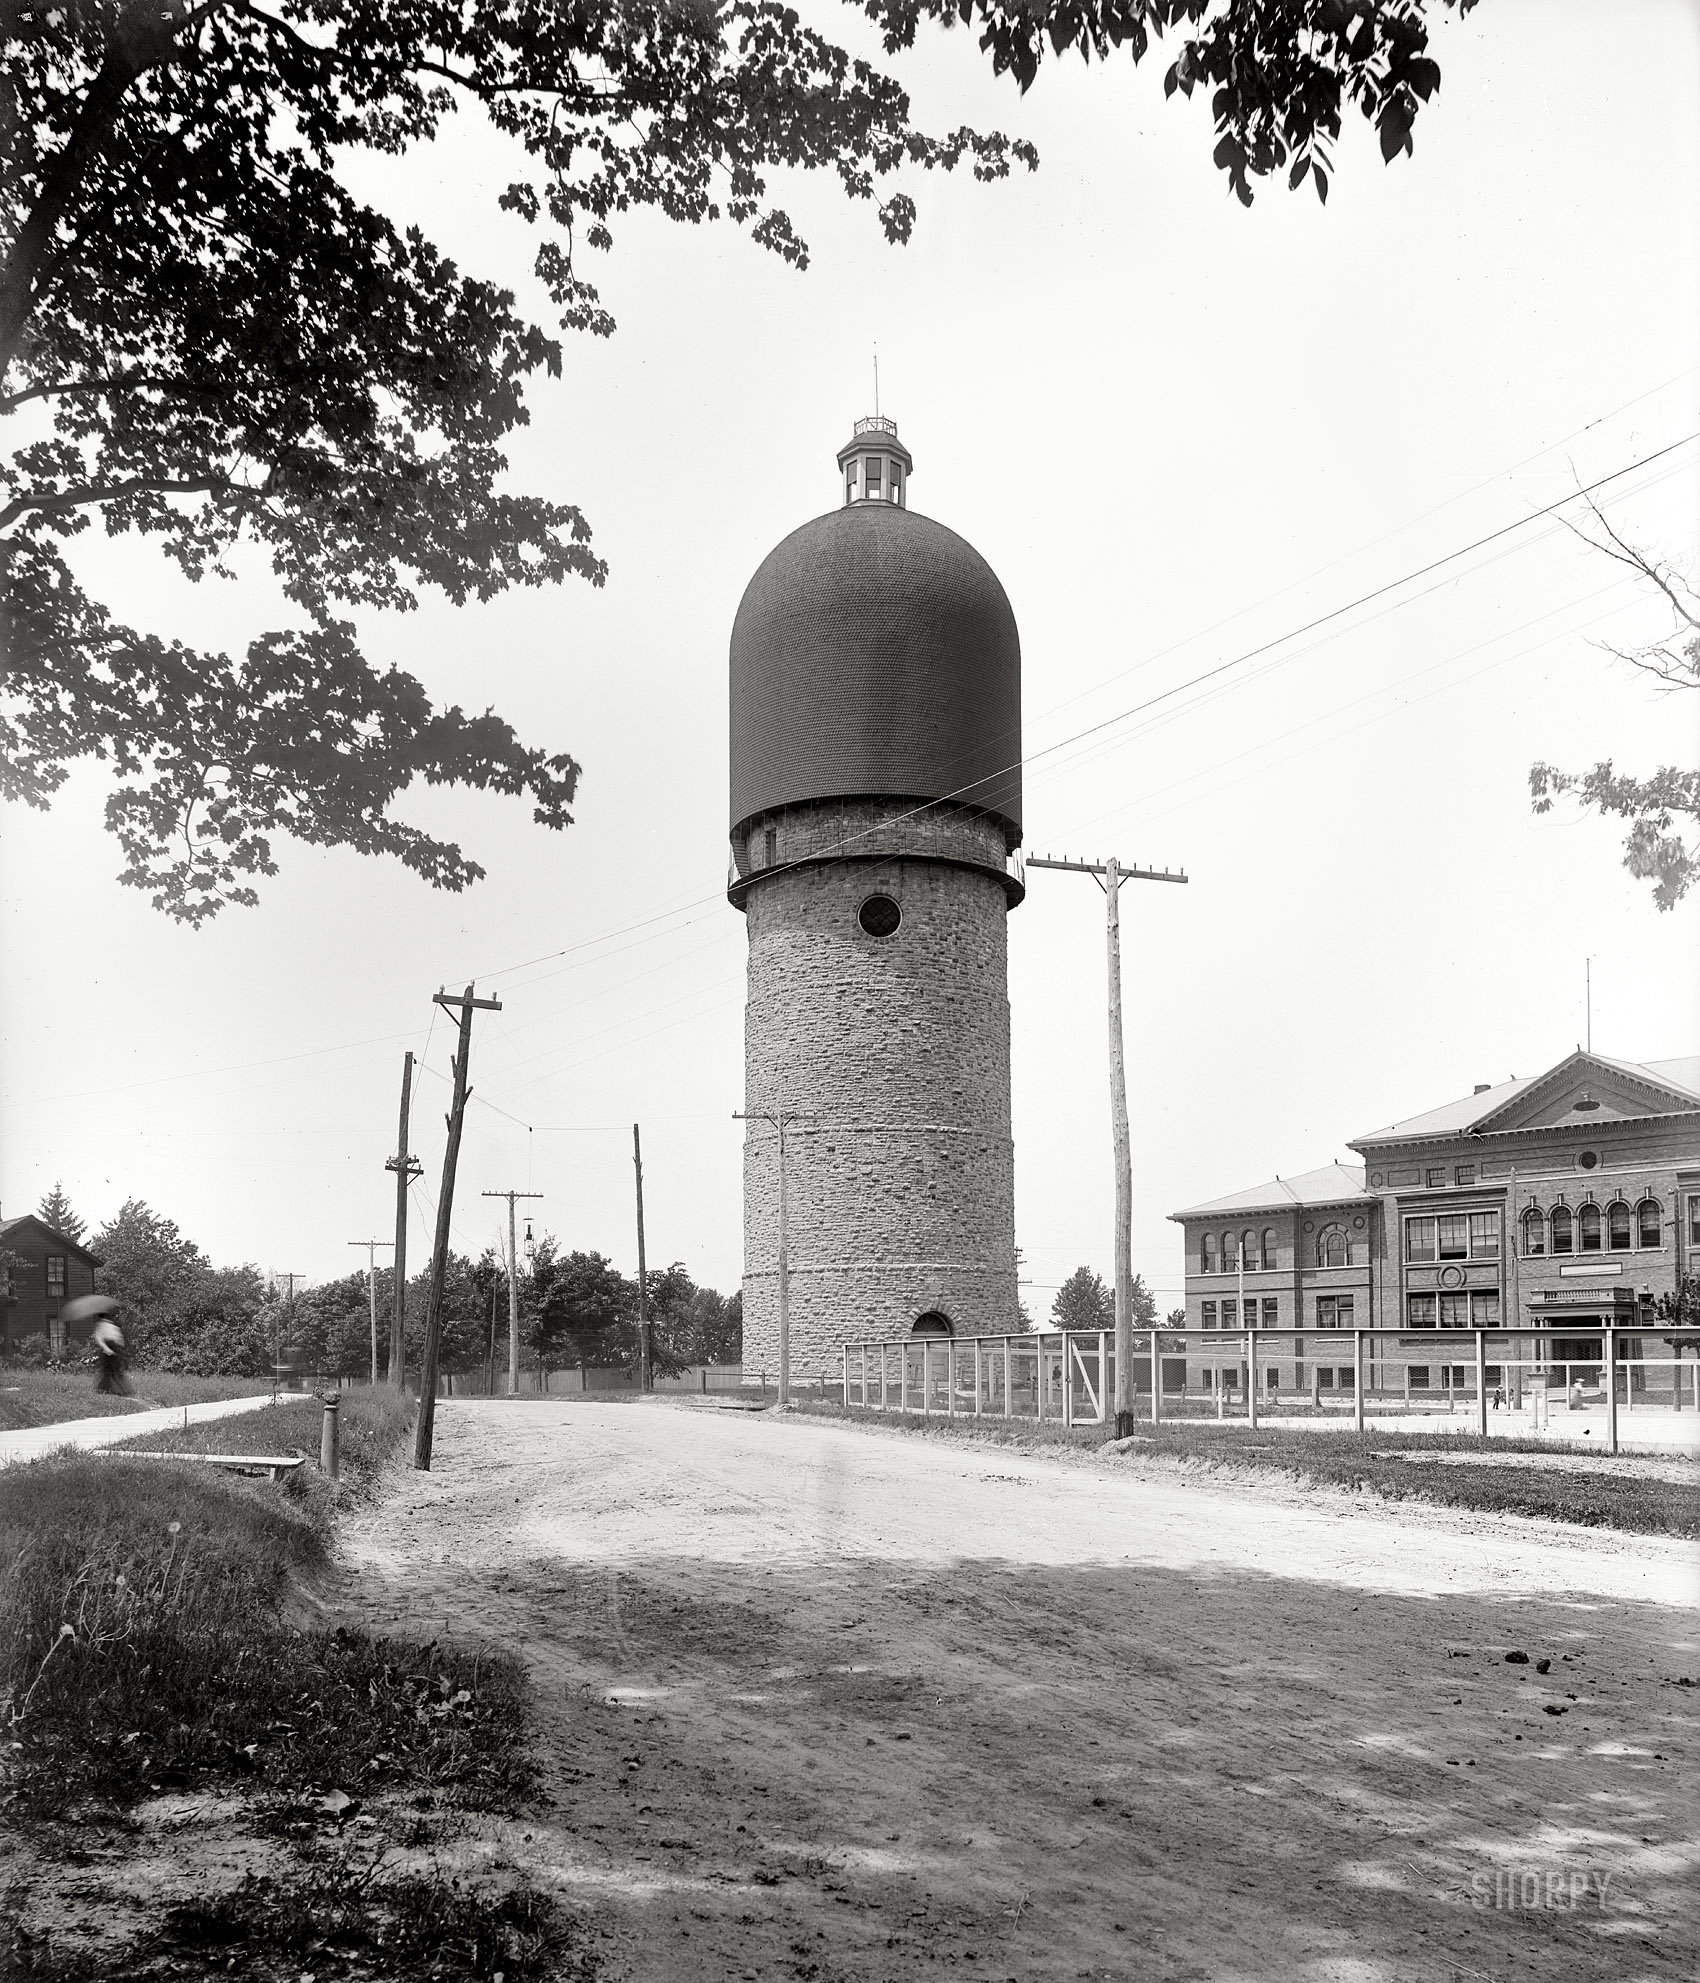 Ypsilanti, Michigan, circa 1900. "Water tower." 8x10 inch dry plate glass negative, Detroit Publishing Company. View full size.